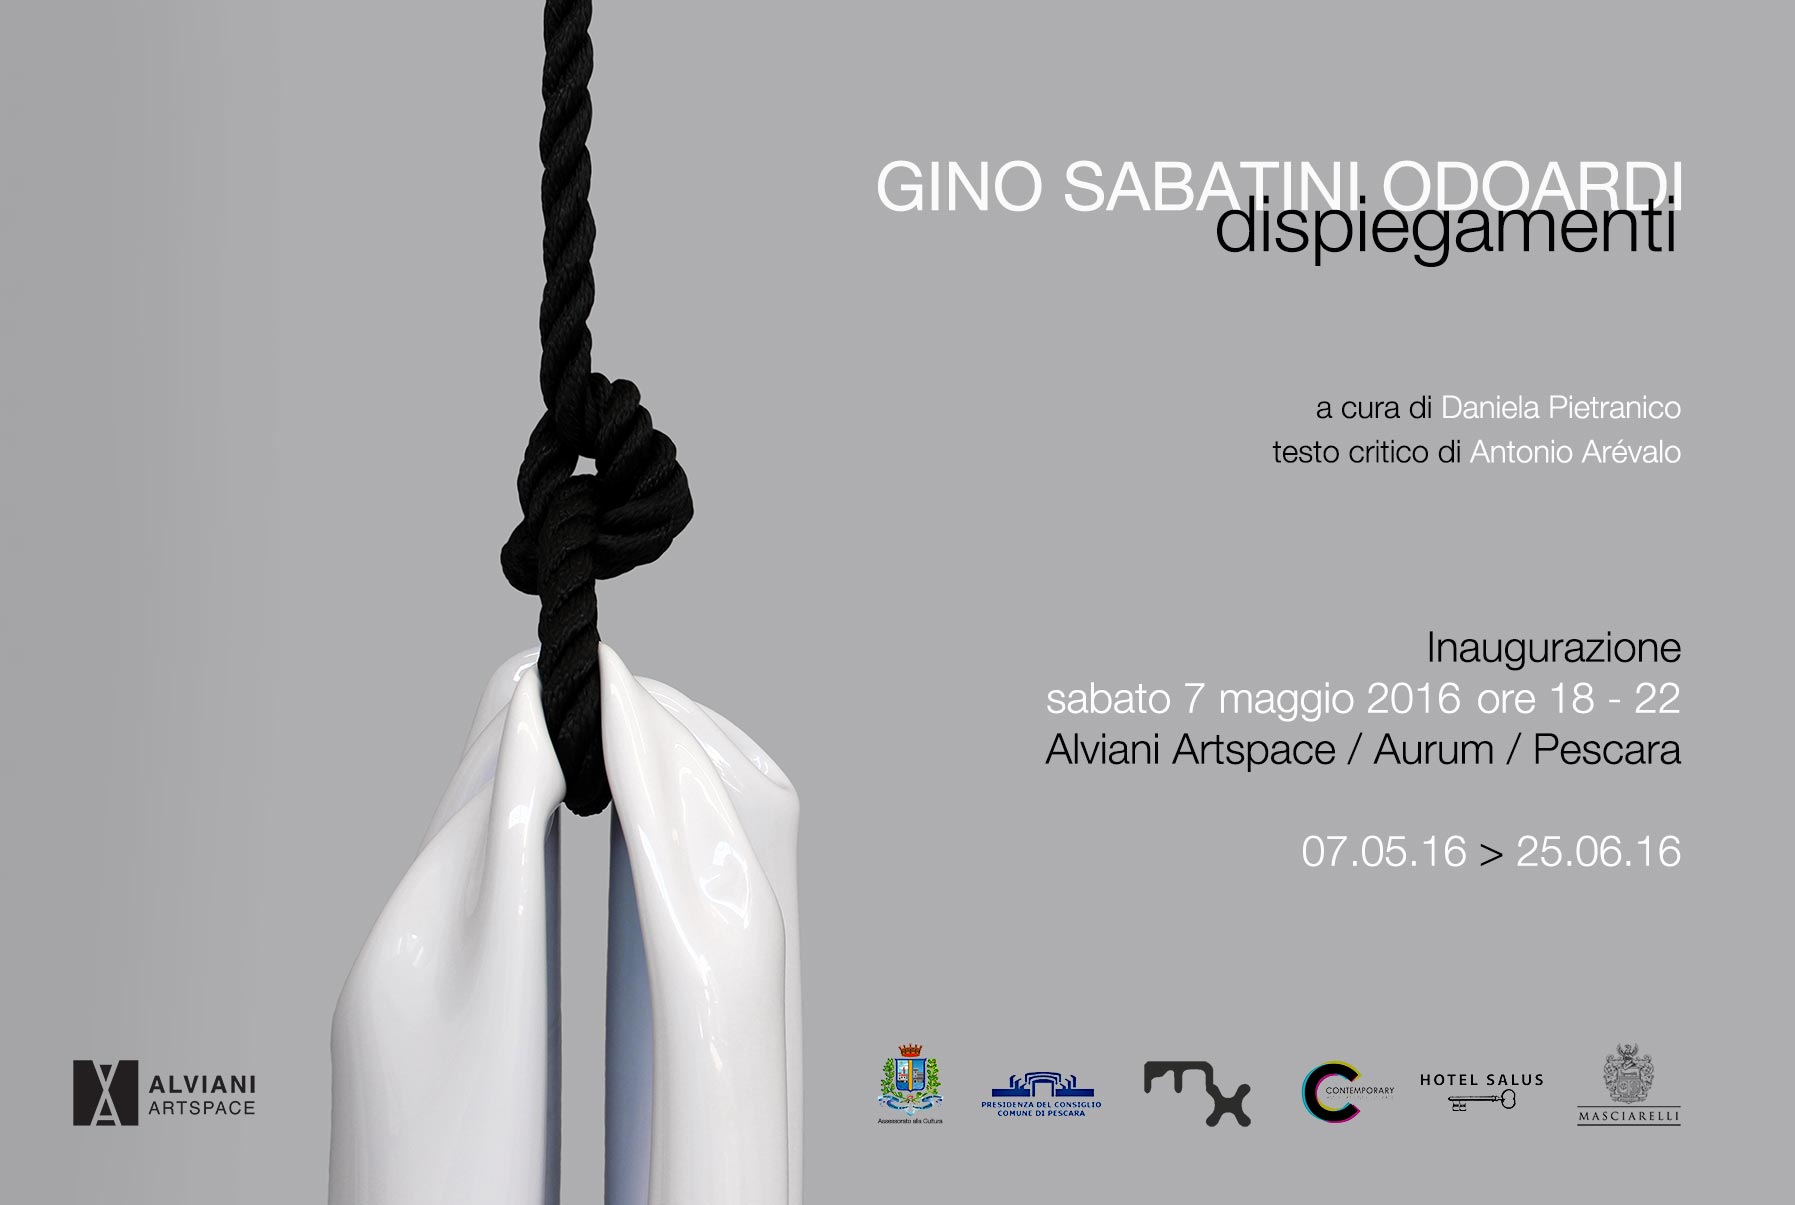 Gino Sabatini Odoardi - Dispiegamenti